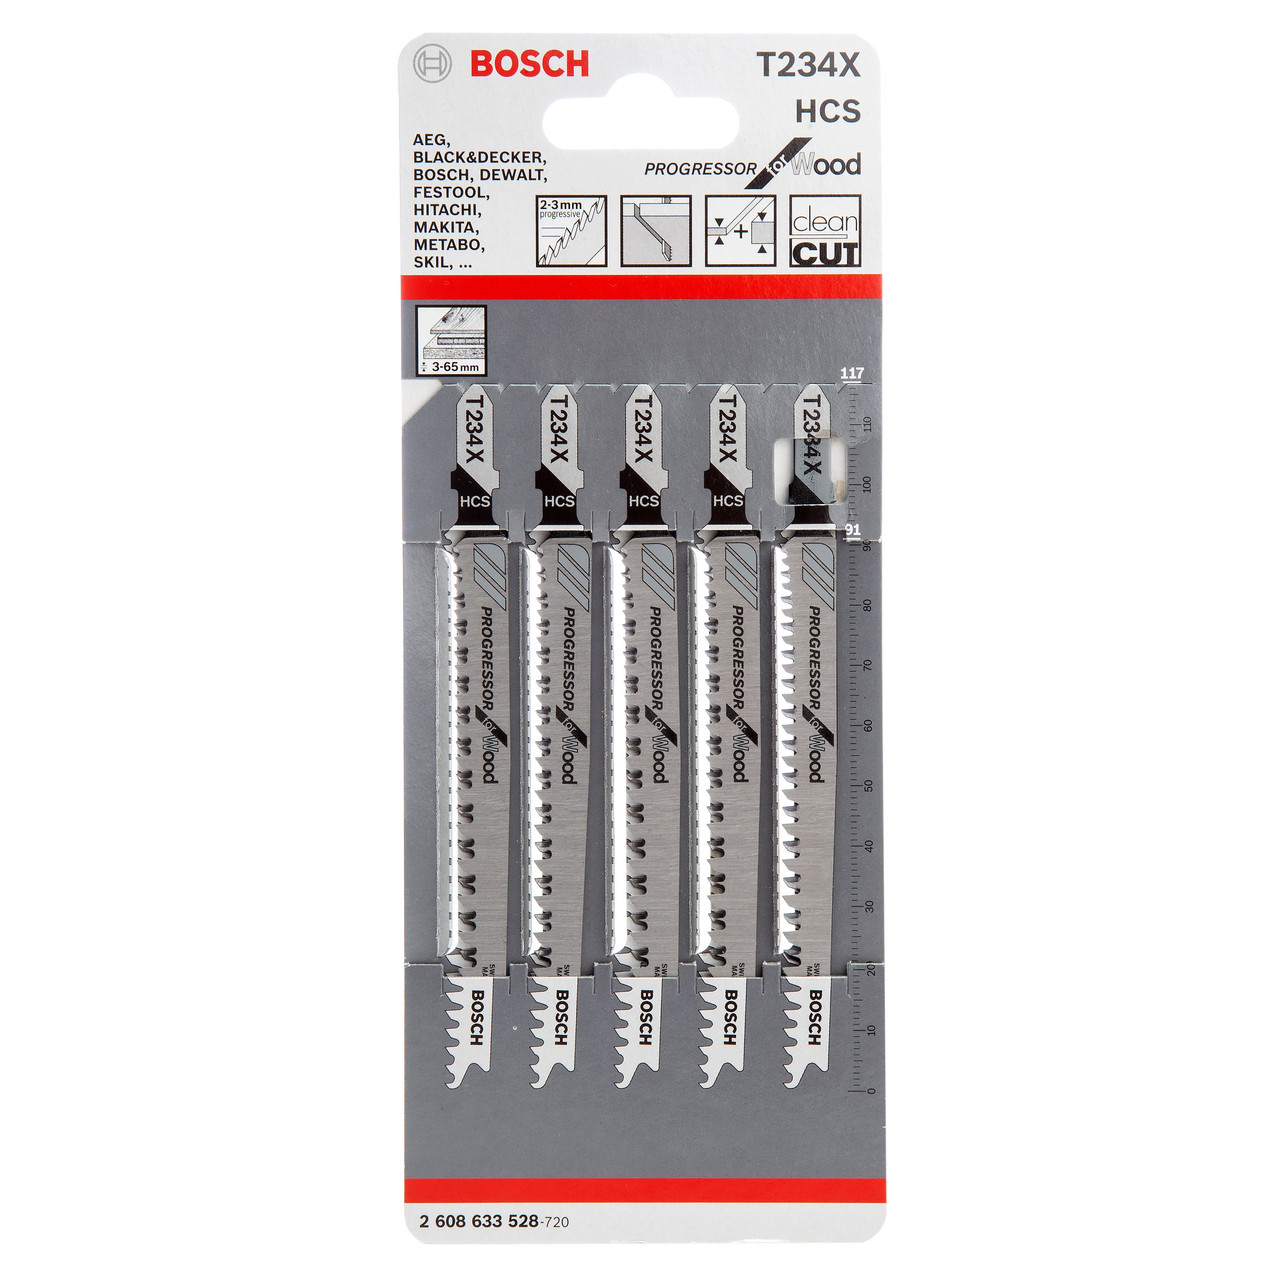 Photos - Electric Jigsaw Bosch T234X Jigsaw Blades HCS Progressor for Wood  2608633528 (5 Pack)